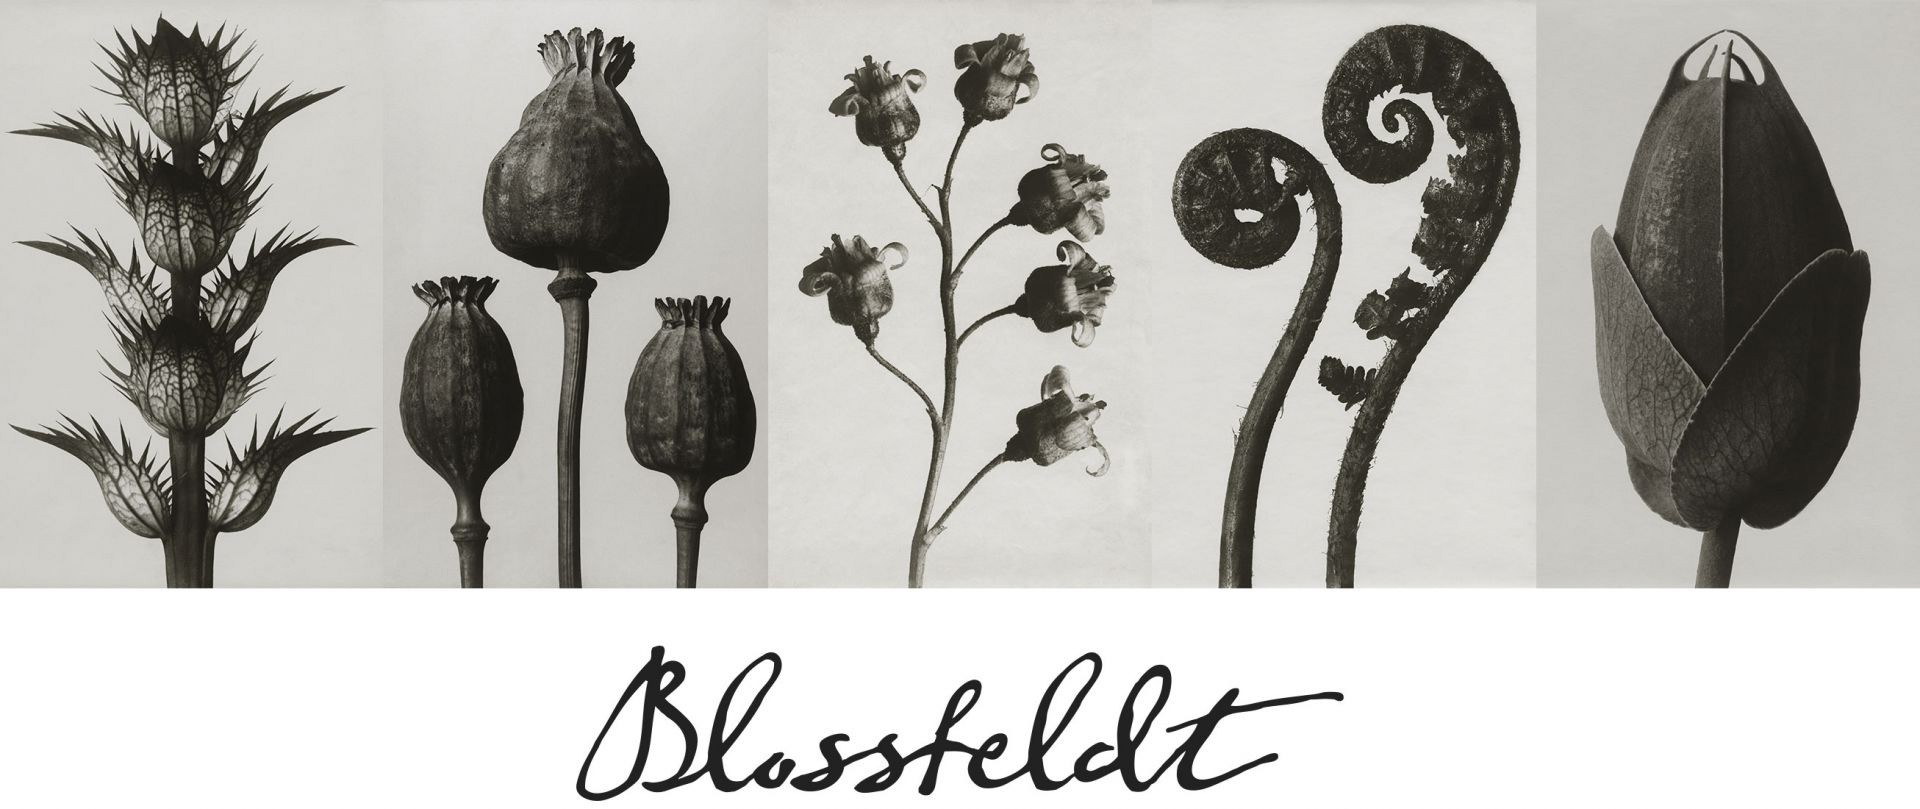 Blossfeldt - Vintage